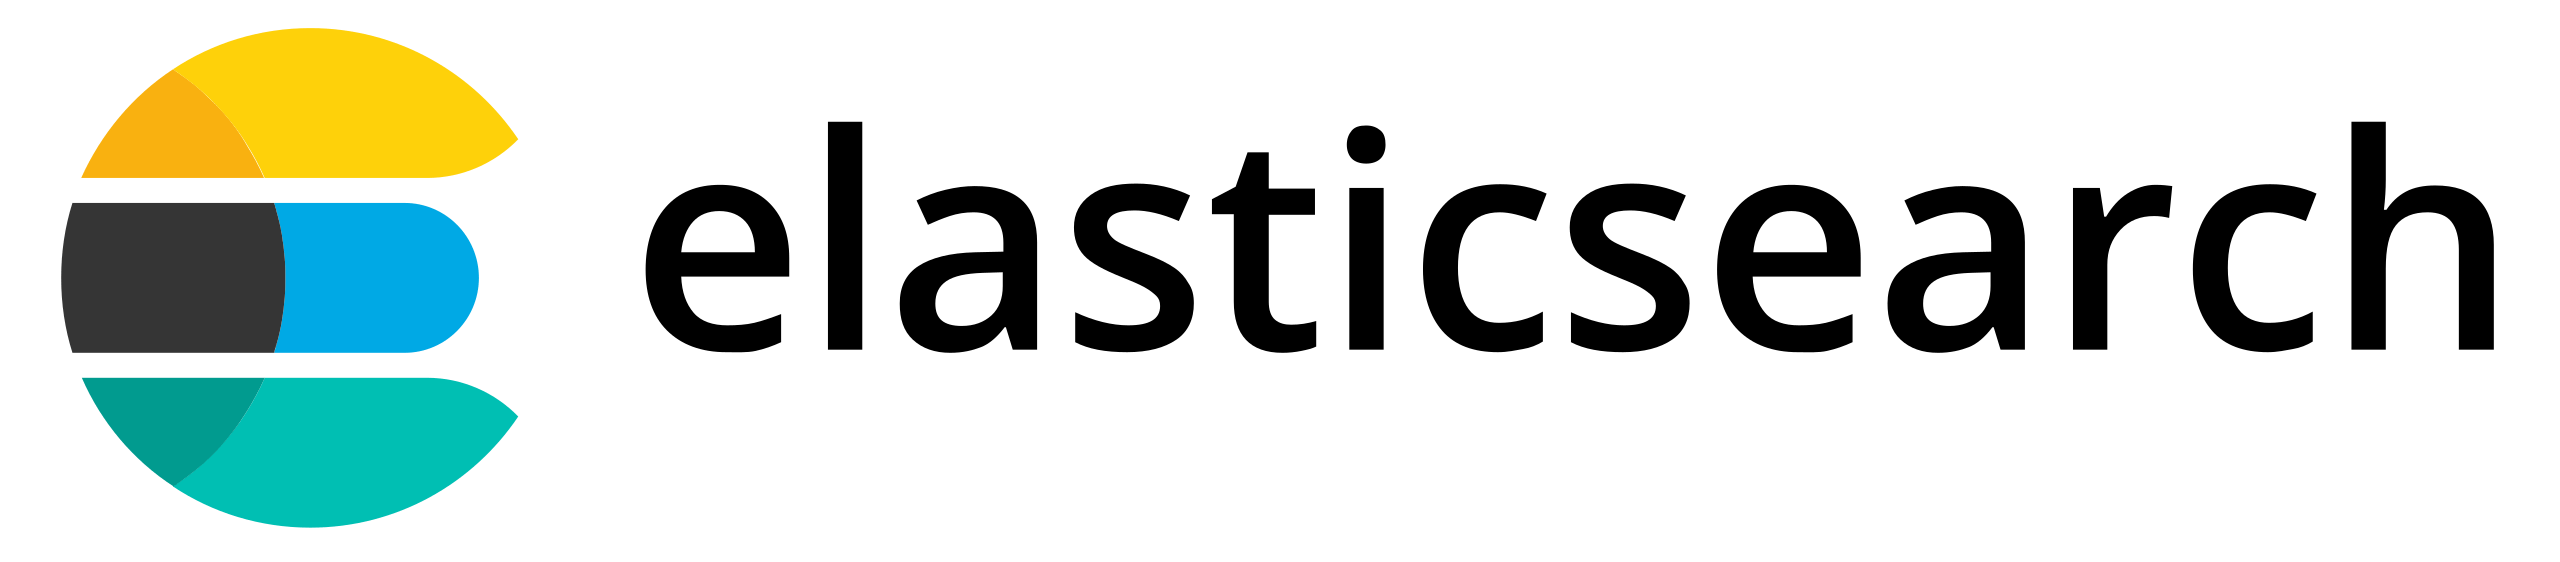 Elasticsearch_logo